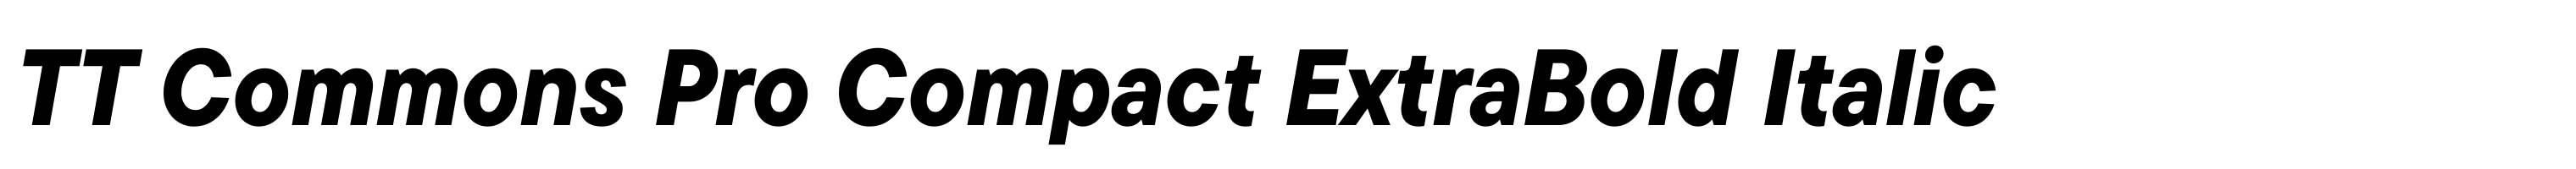 TT Commons Pro Compact ExtraBold Italic